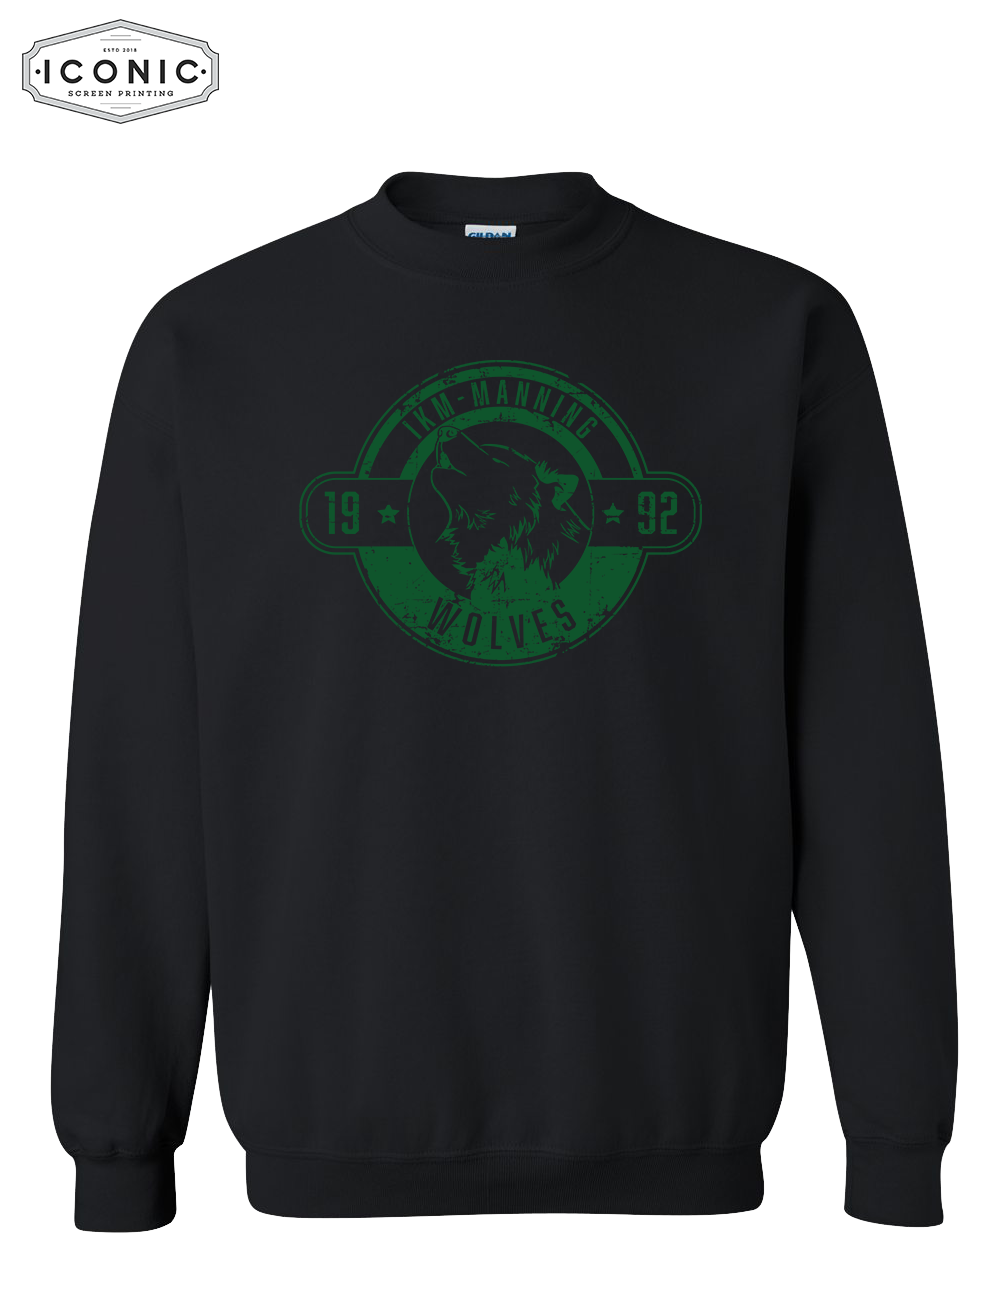 Est 1992 - Heavy Blend Sweatshirt